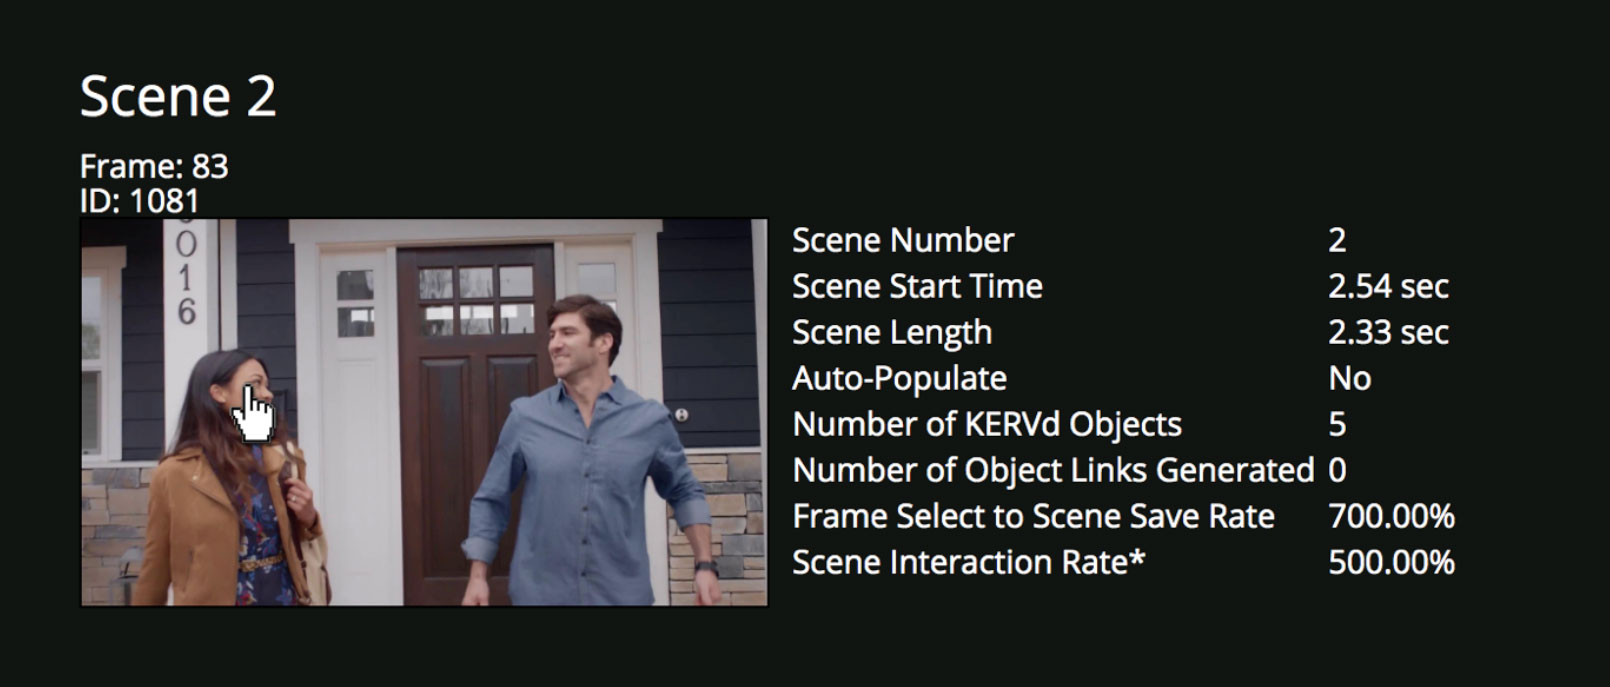 KERV Interactive Video Scene-Level Data Dashboard